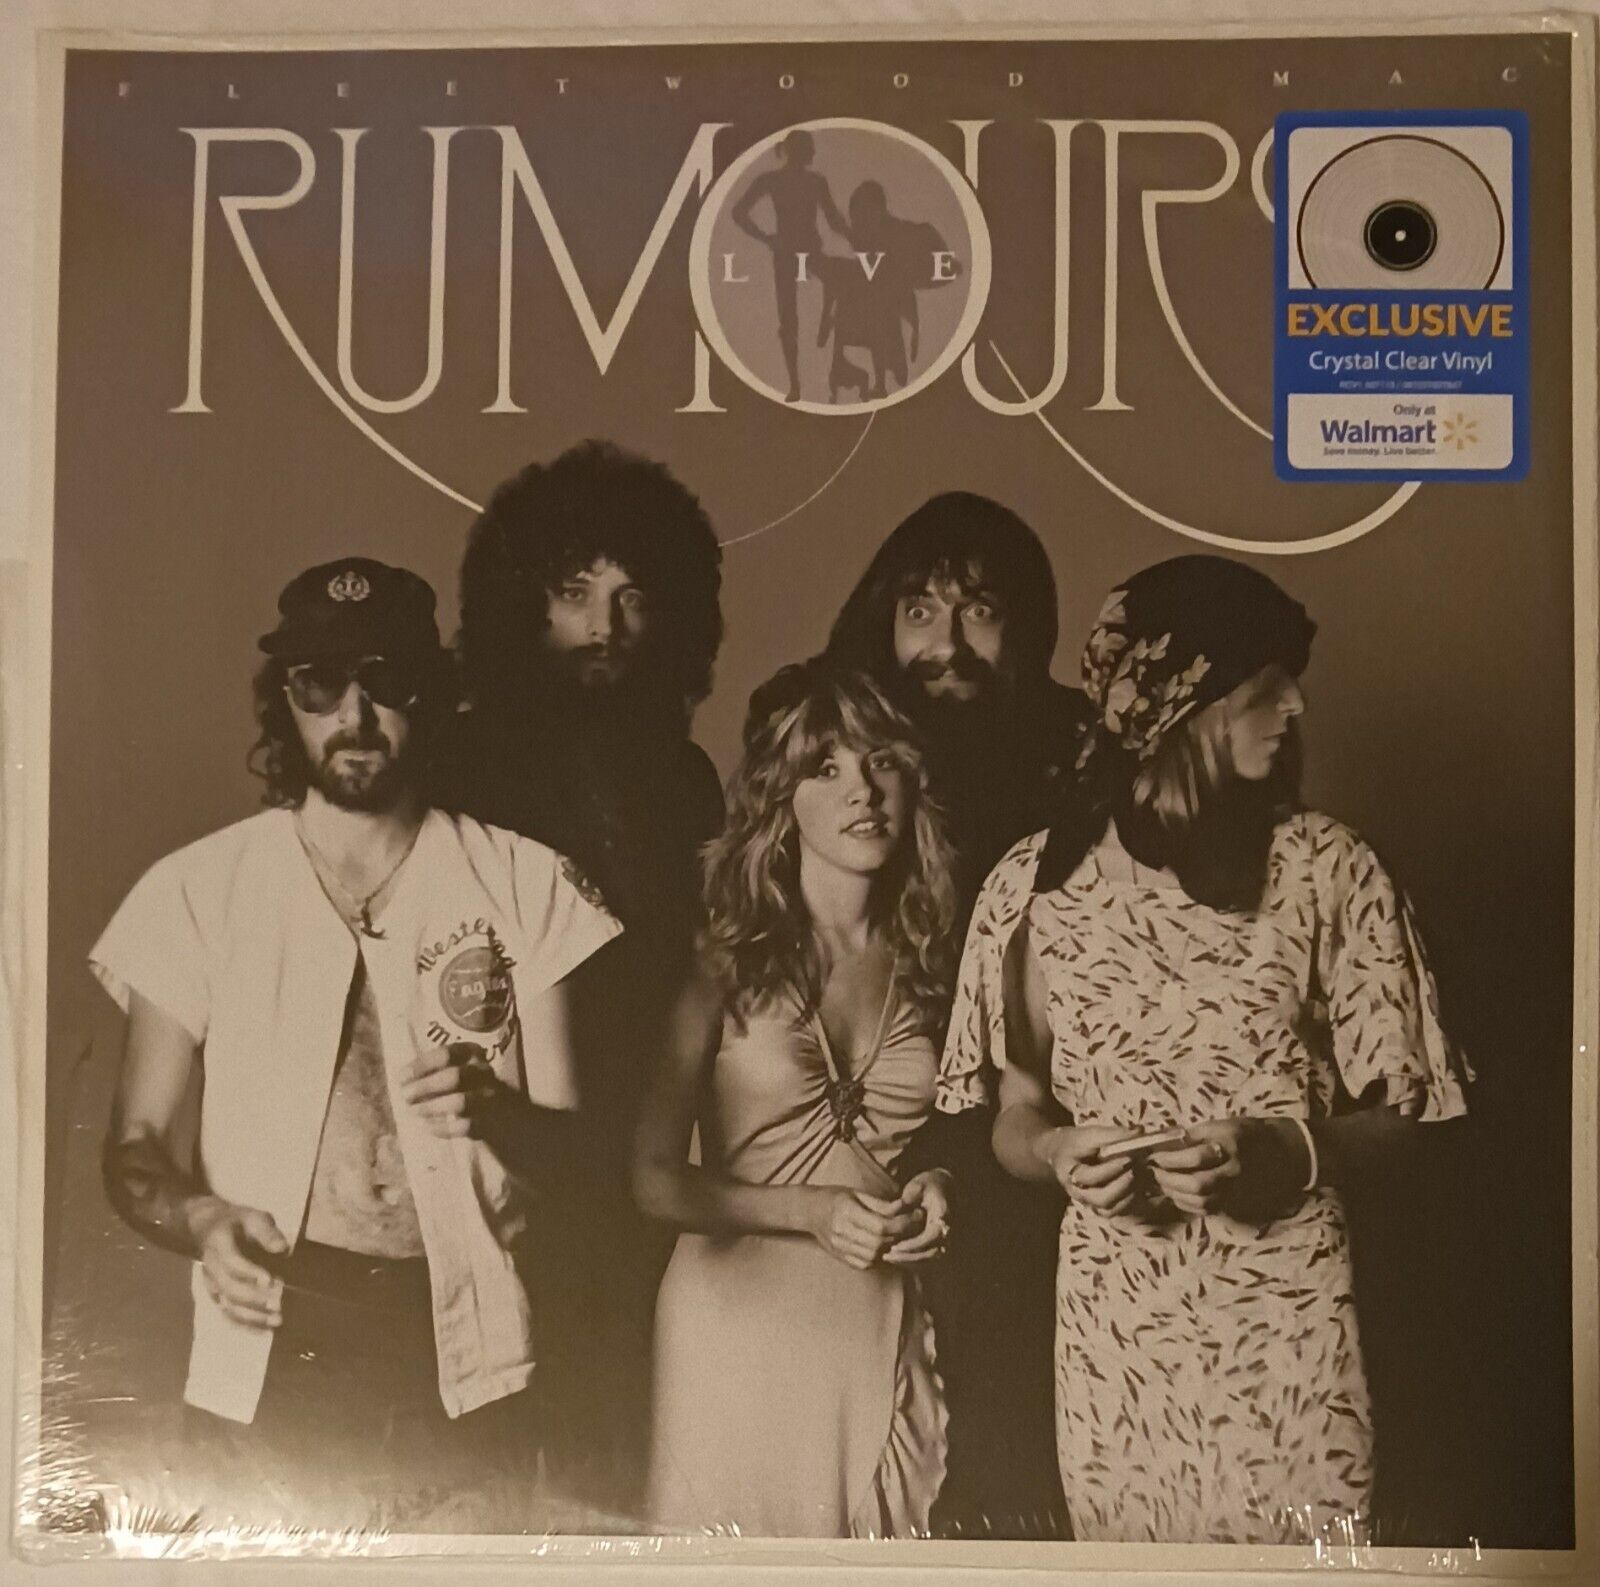 Fleetwood Mac - Rumours Live Walmart Exclusive Crystal Clear Vinyl 2 LP Sealed